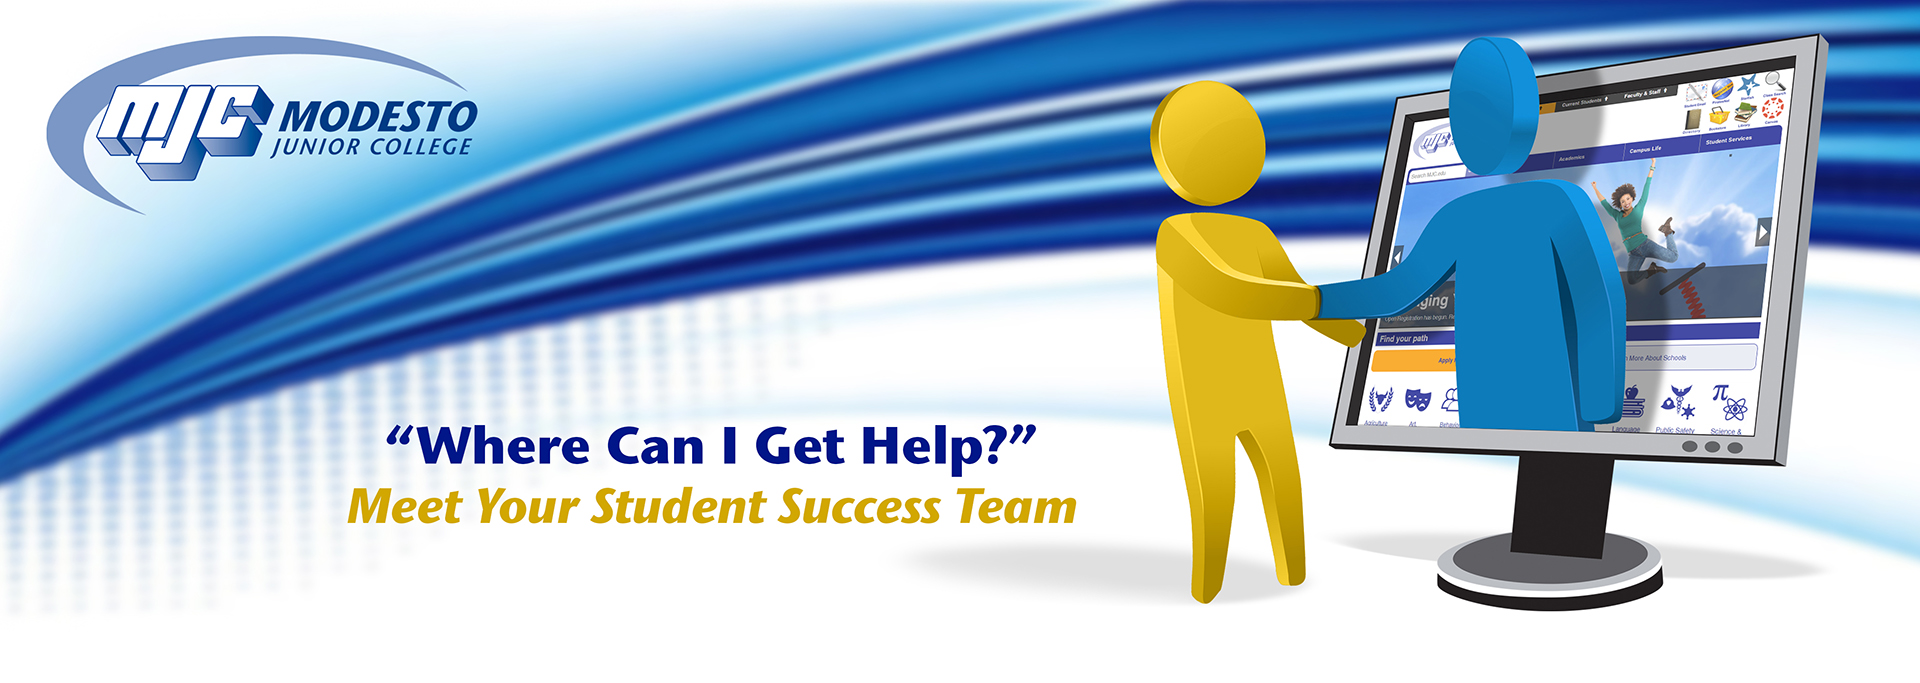 Meet your student success team